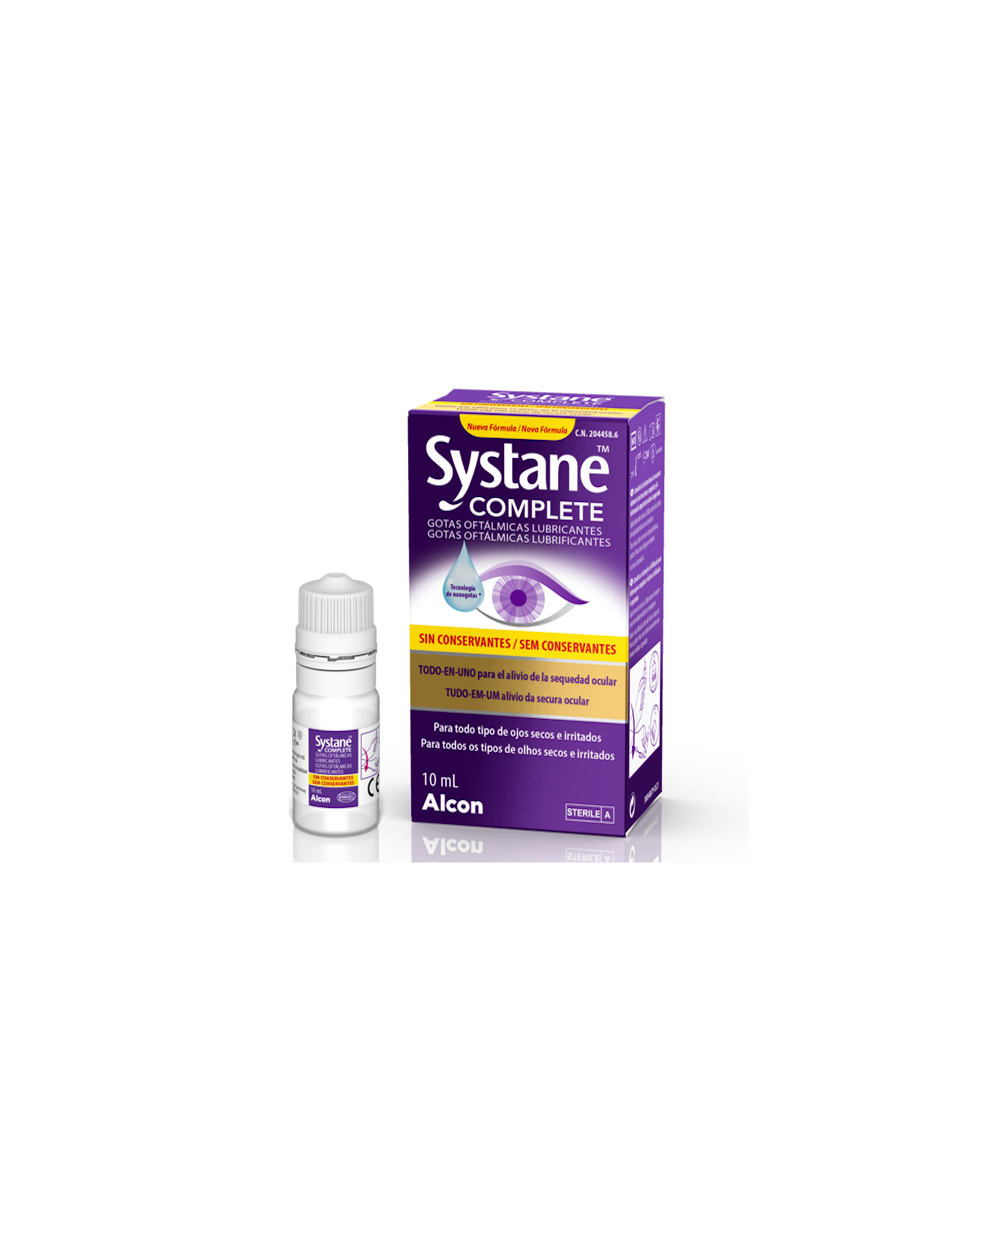 Systane complete 10ml sin conservantes